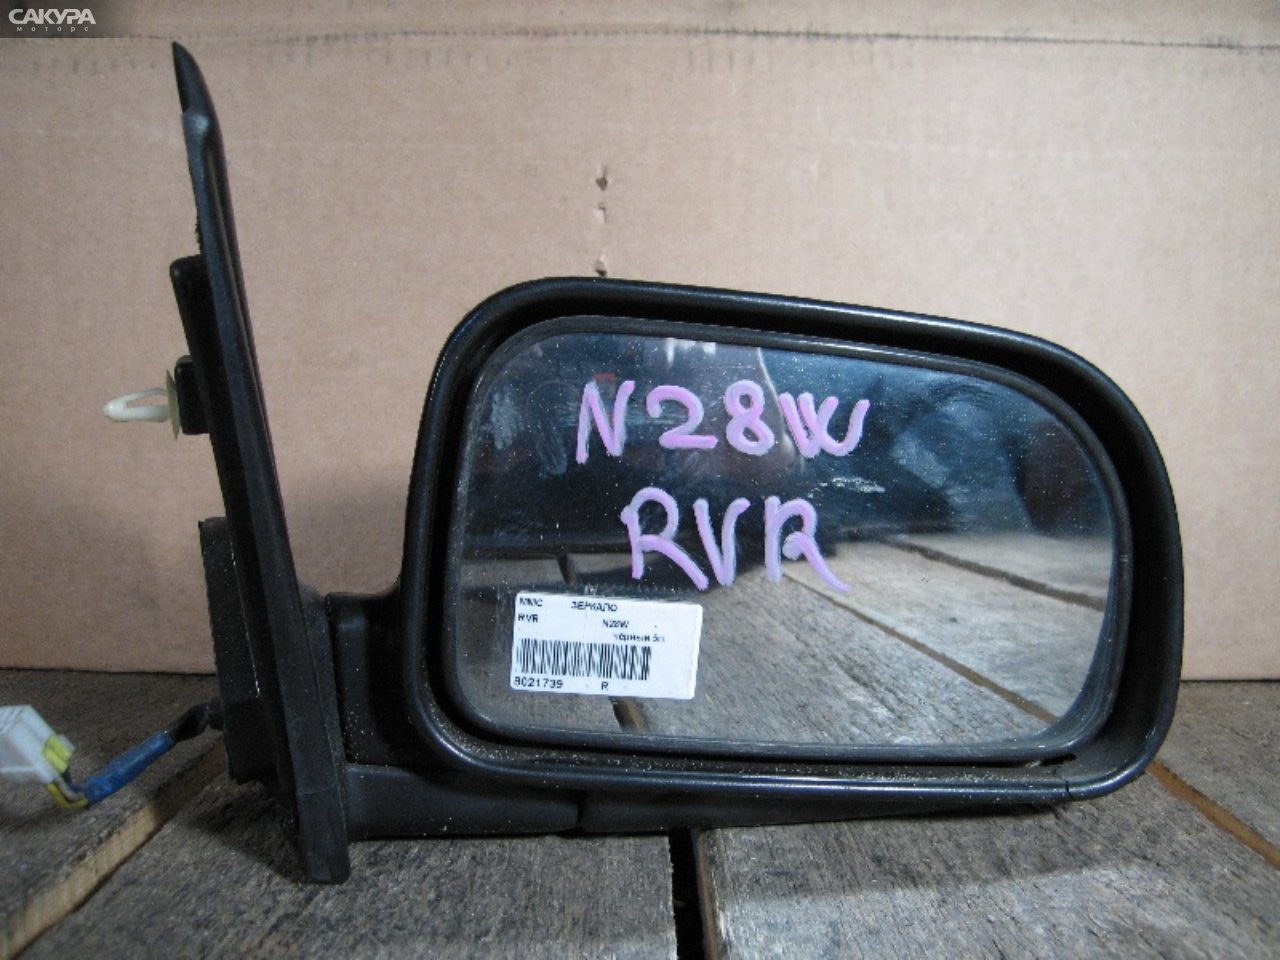 Зеркало боковое правое Mitsubishi RVR N28W: купить в Сакура Абакан.